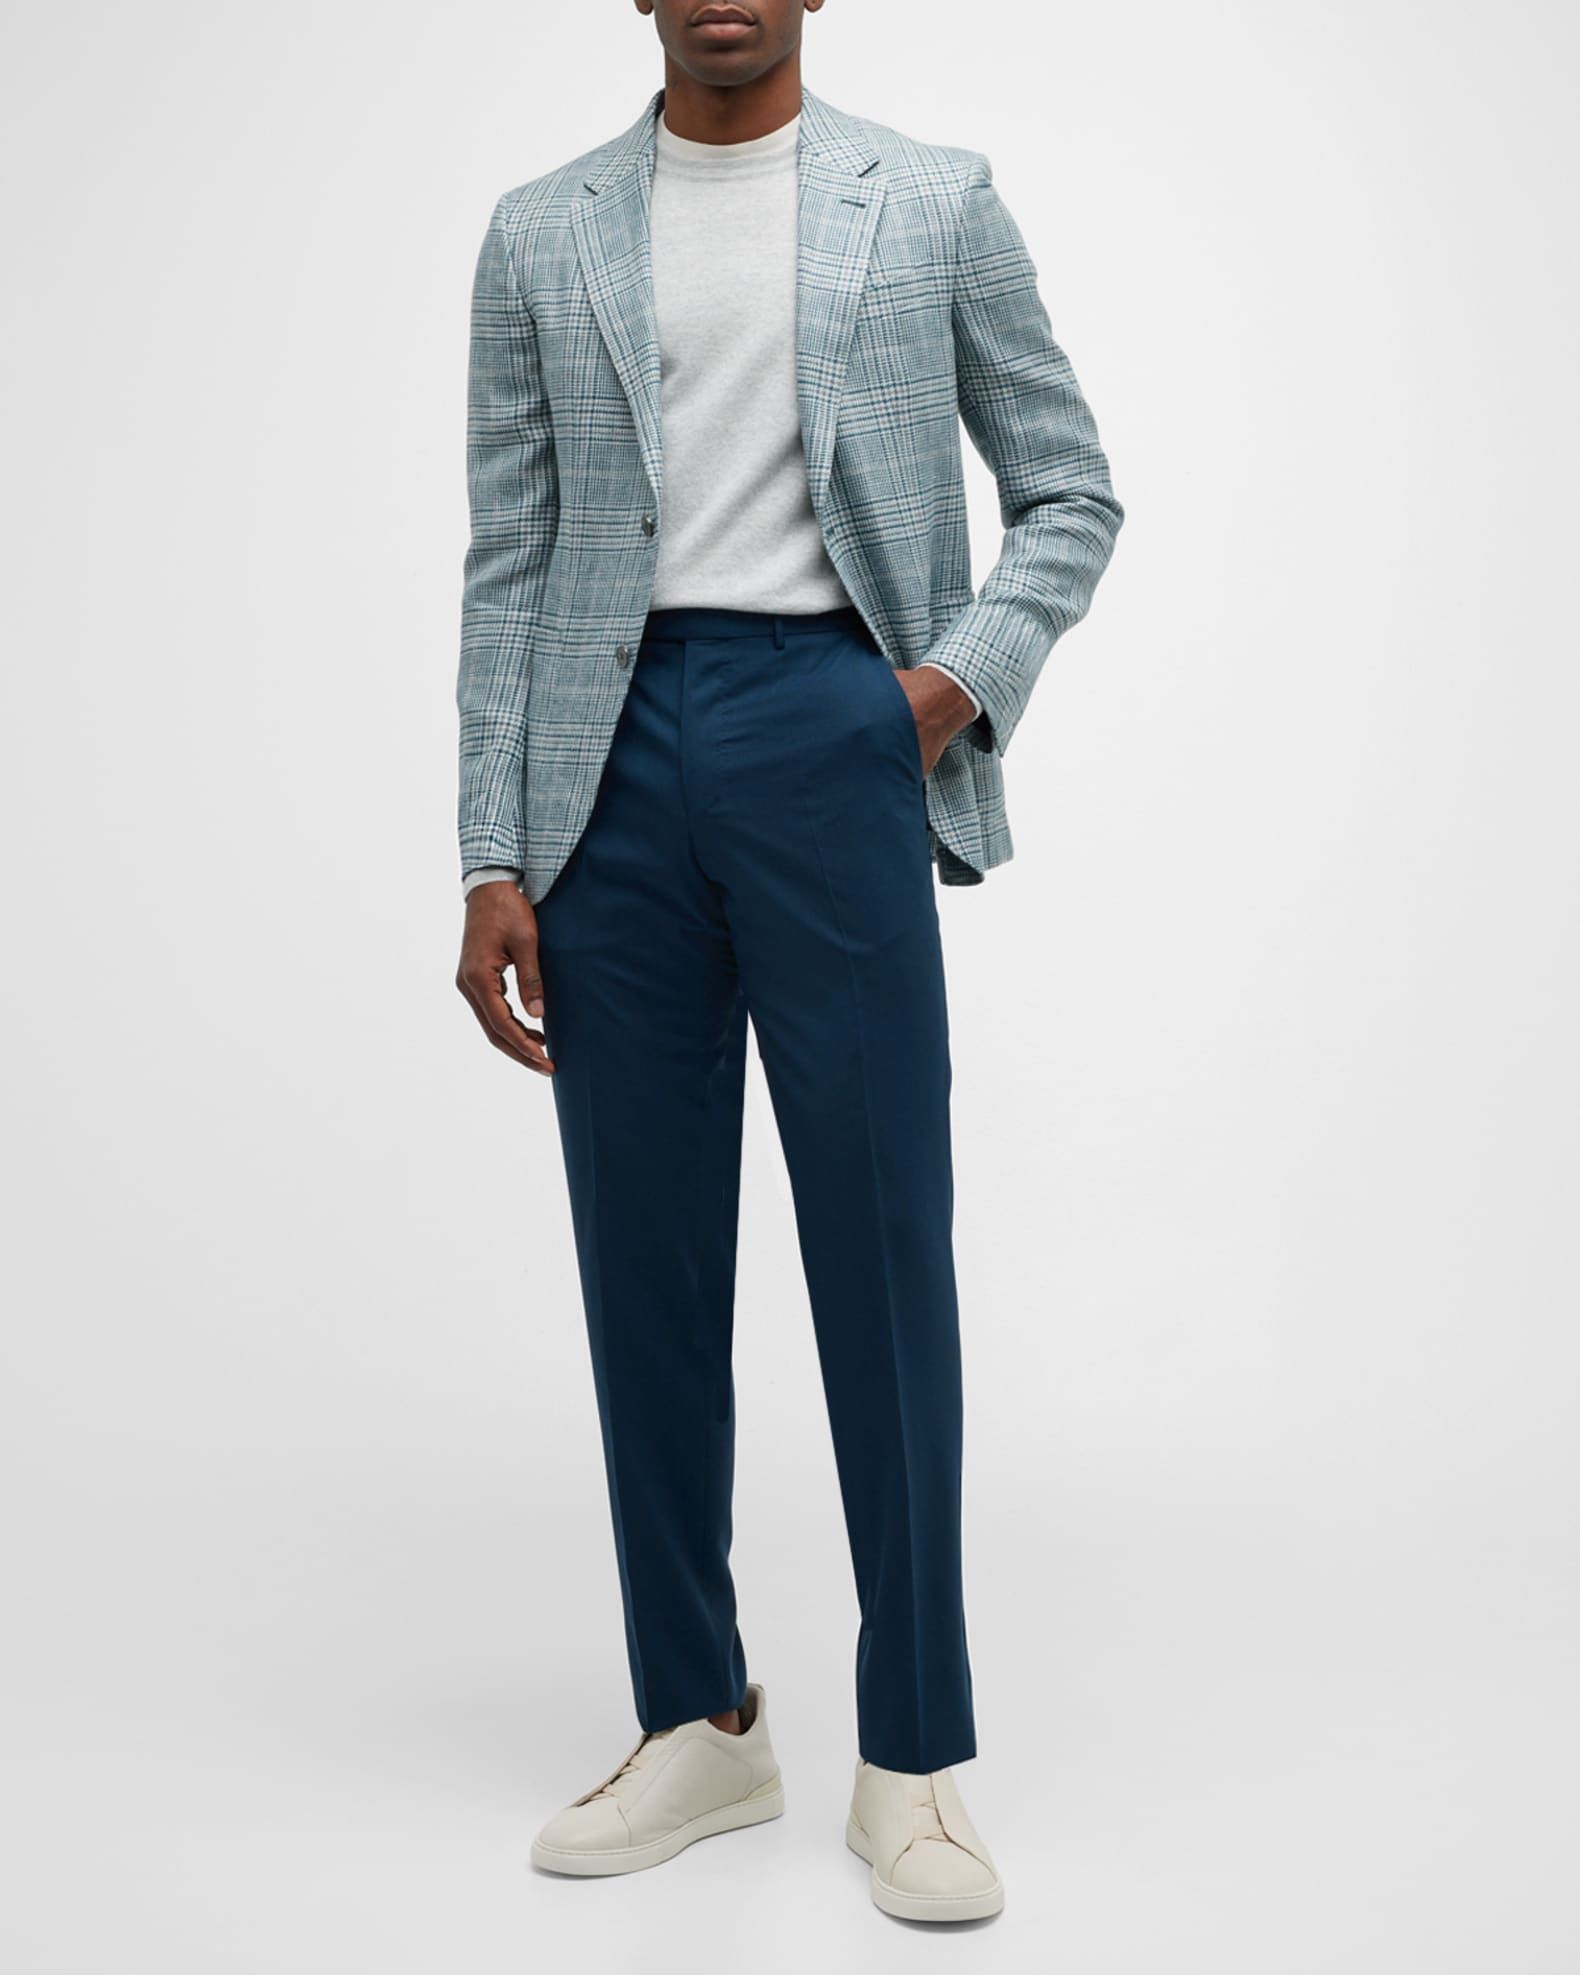 ZEGNA Men's Plaid Linen-Blend Sport Coat | Neiman Marcus